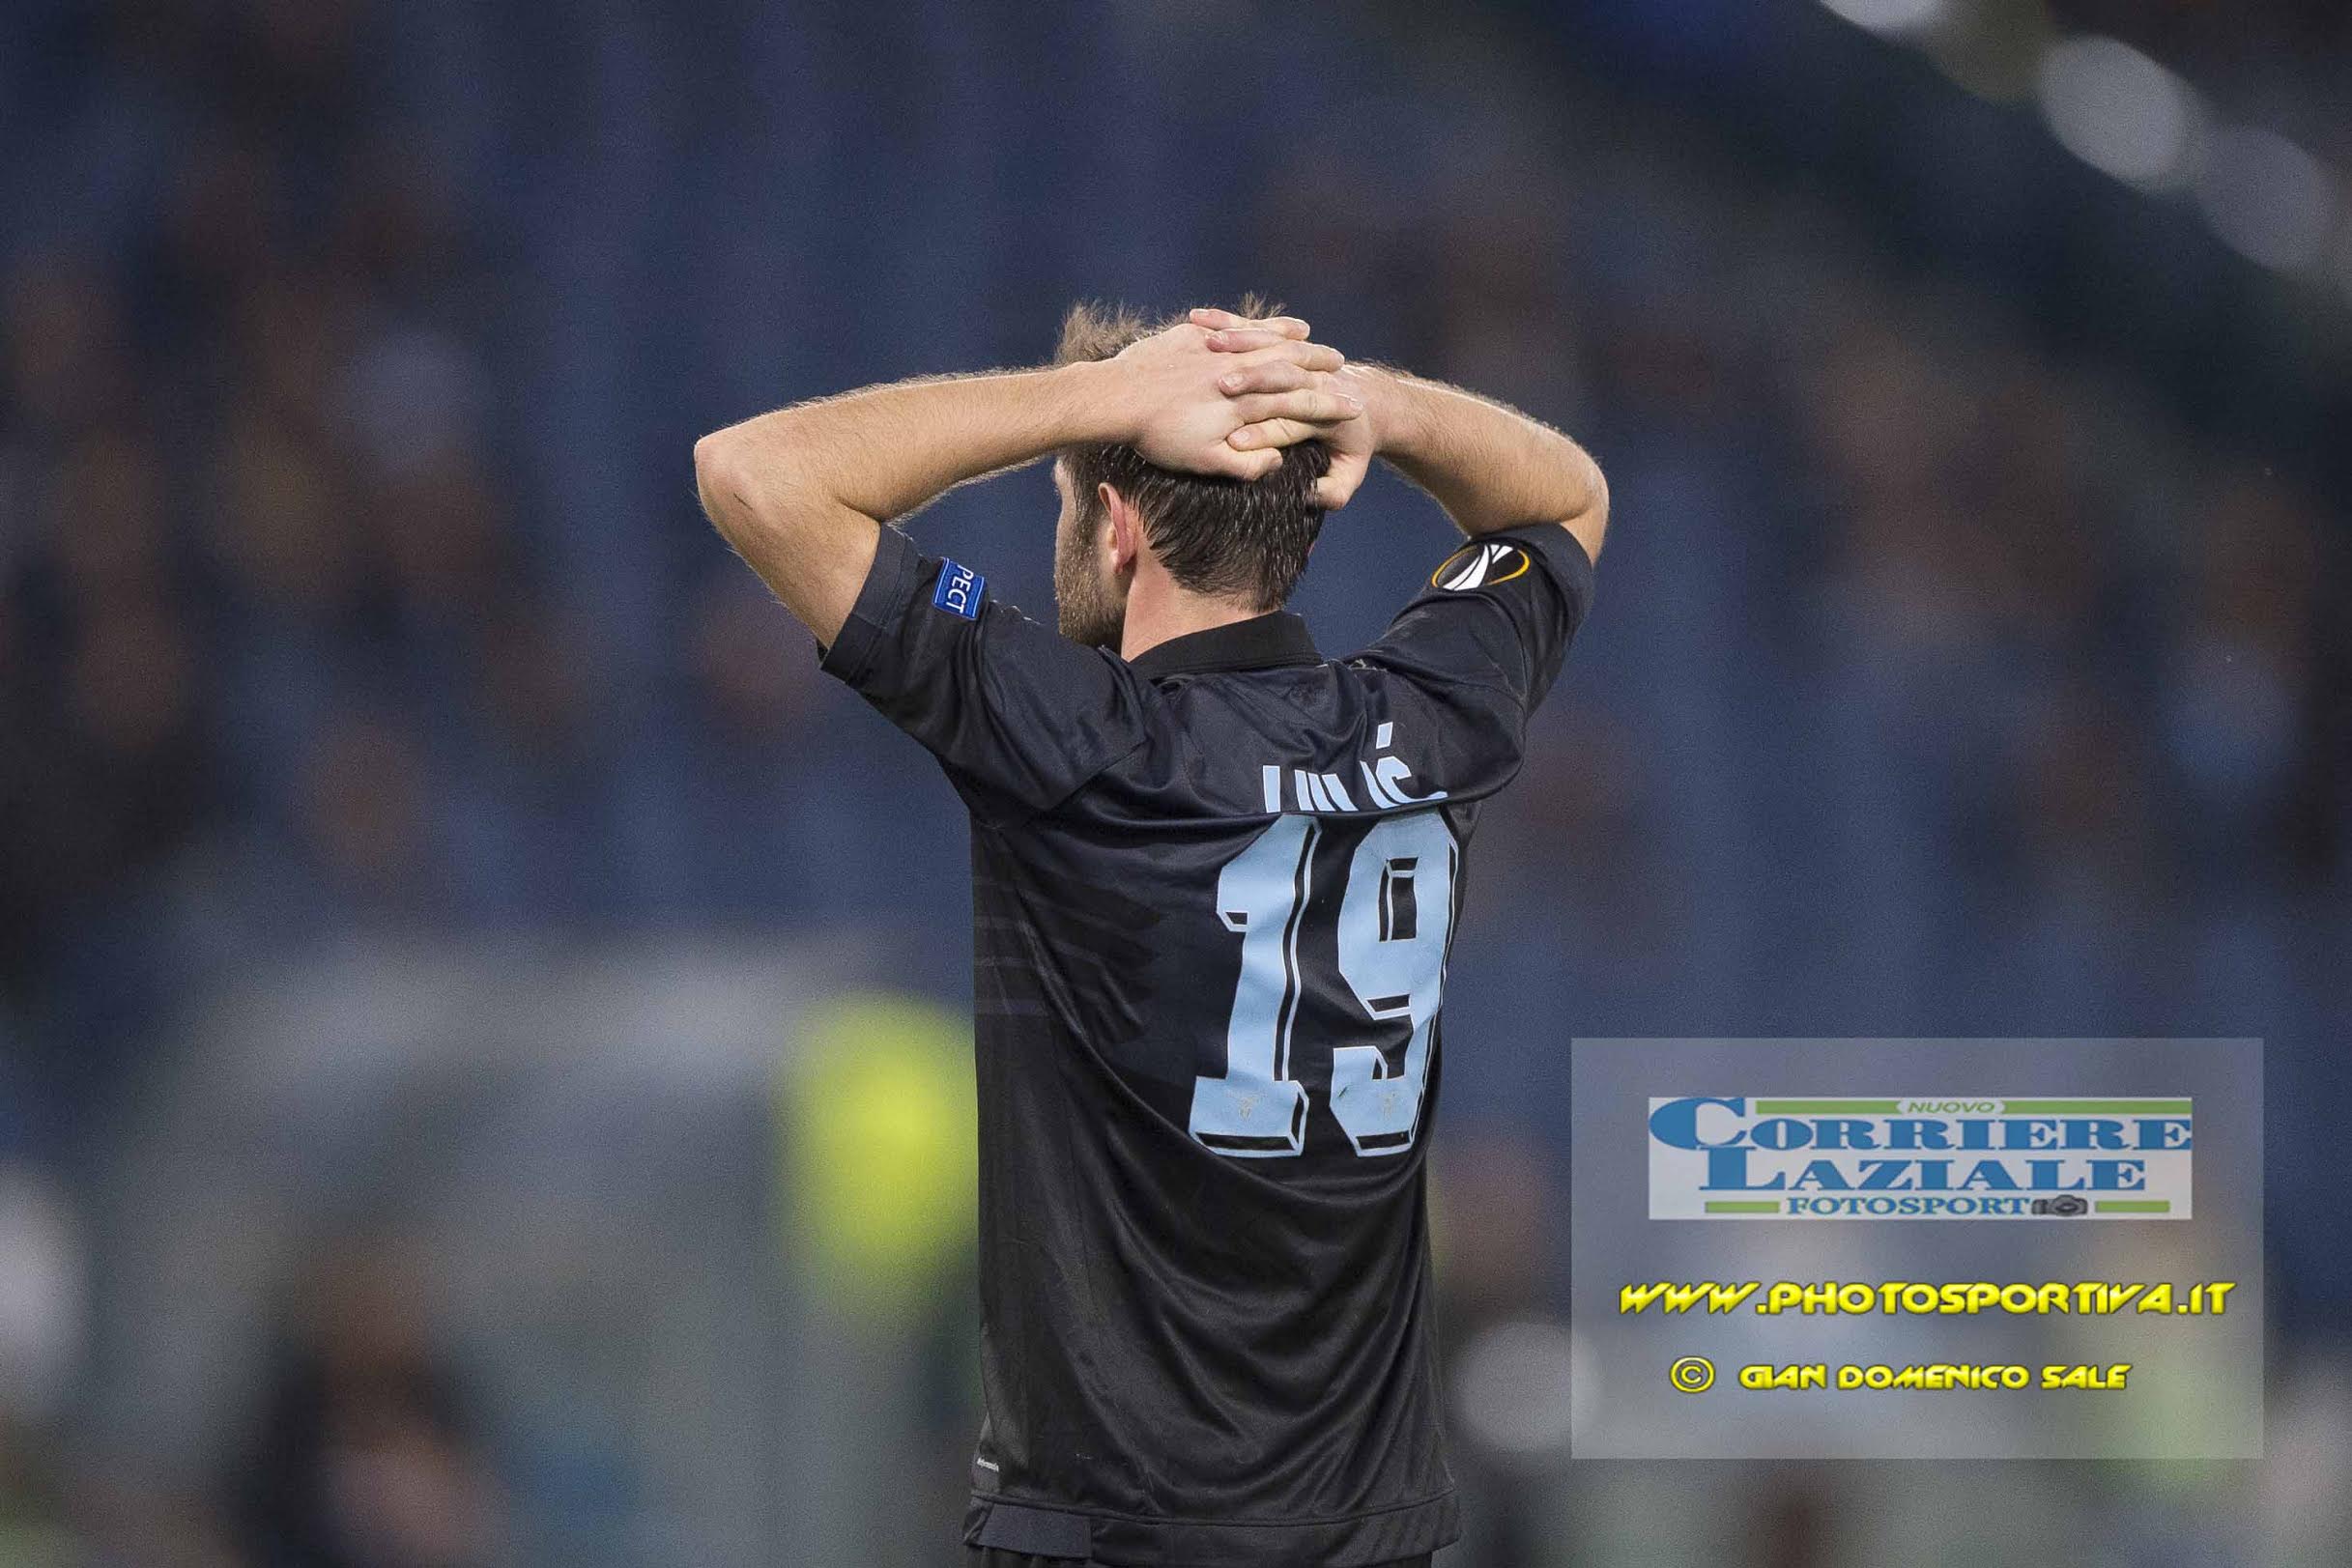 Serie A, Juventus-Lazio 3-0: tutto facile per i bianconeri, la cura-Inzaghi è già finita